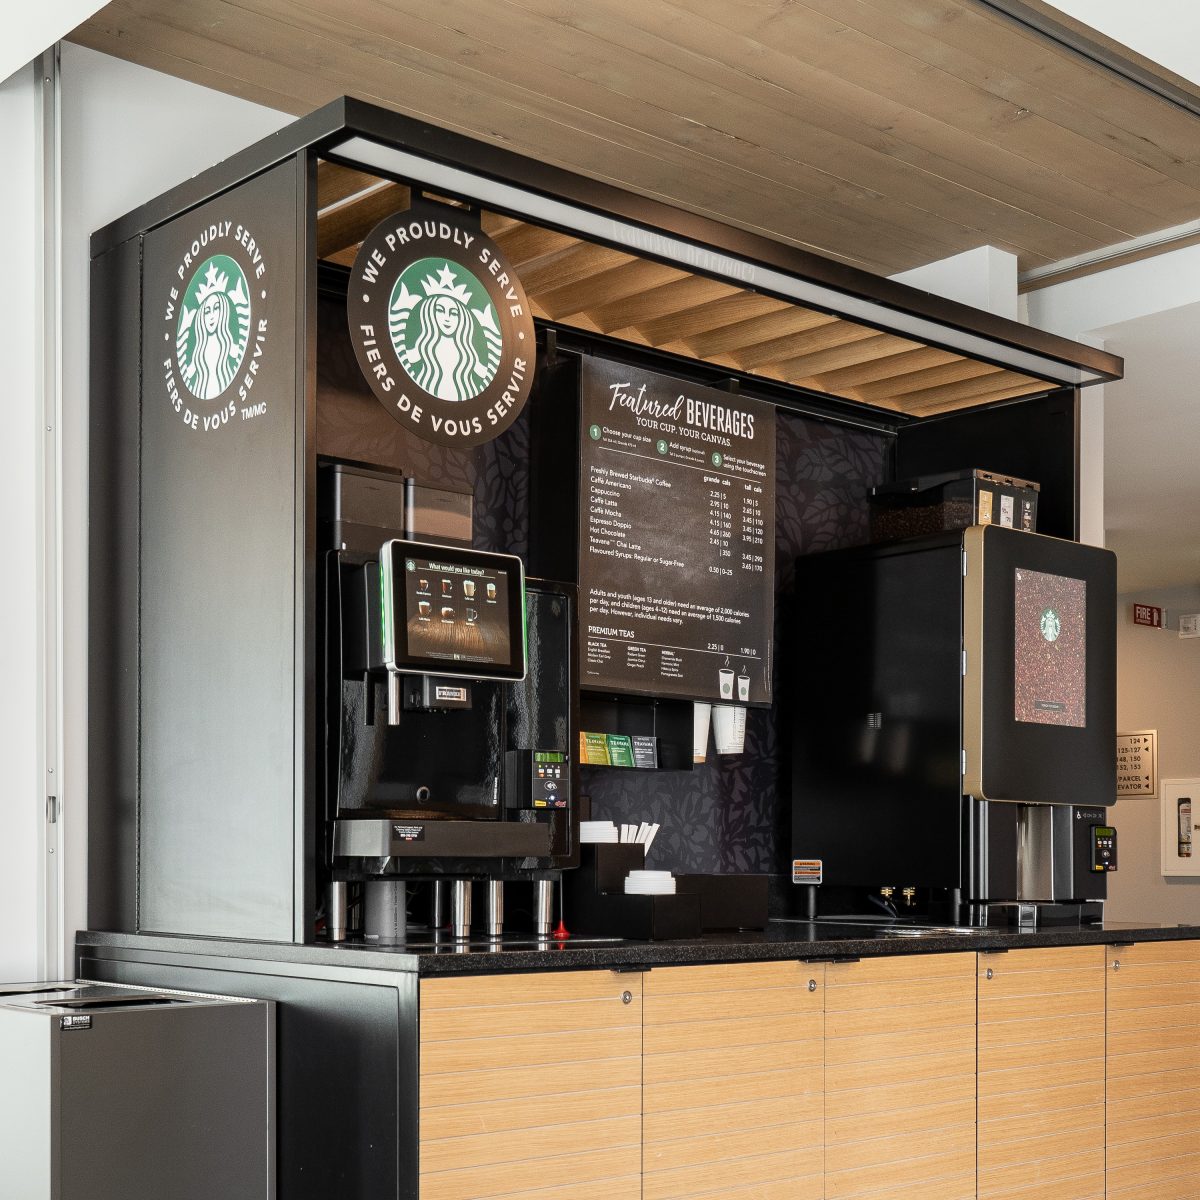 Centennial Court Interior Amenities - Starbucks Coffee Kiosk Lobby